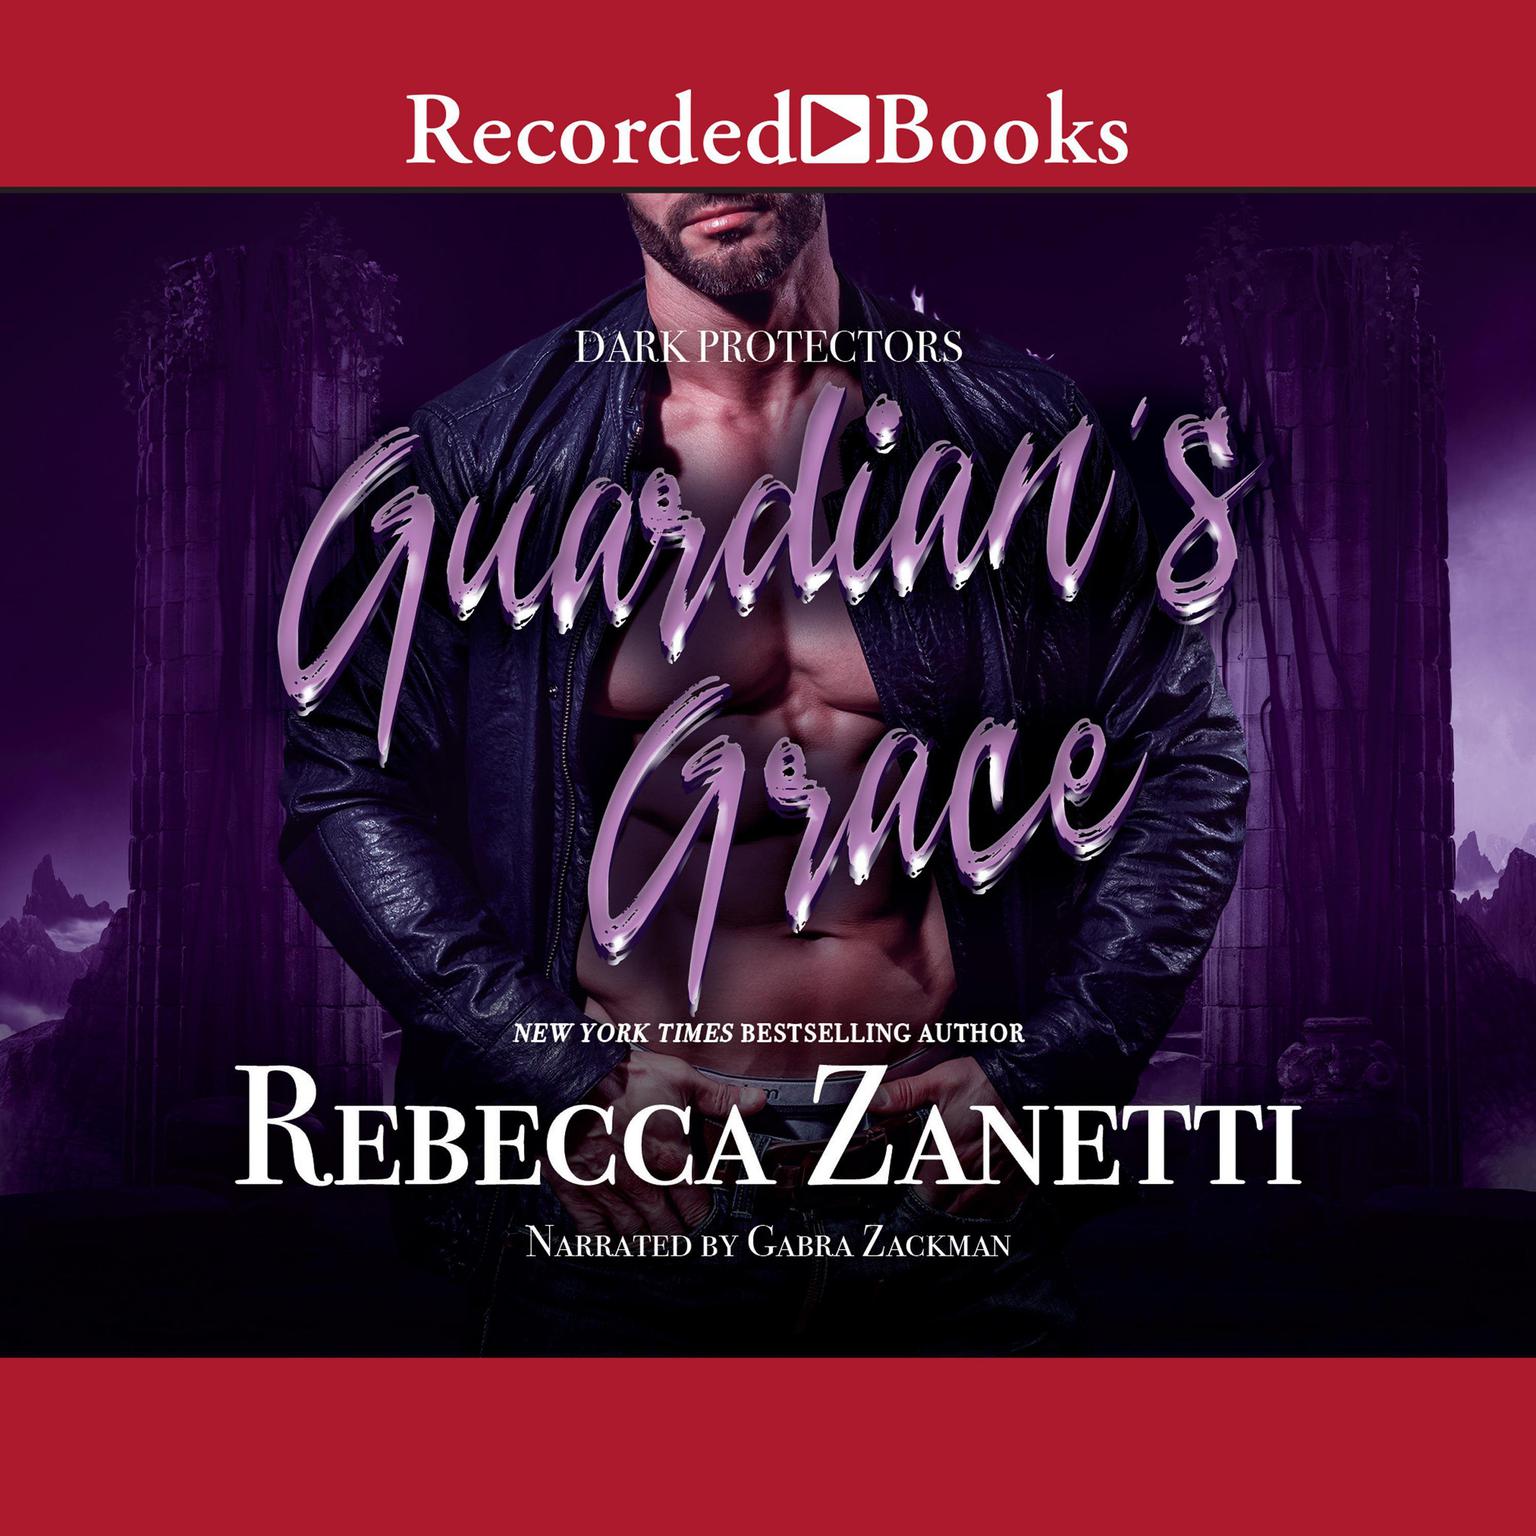 Guardians Grace Audiobook, by Rebecca Zanetti